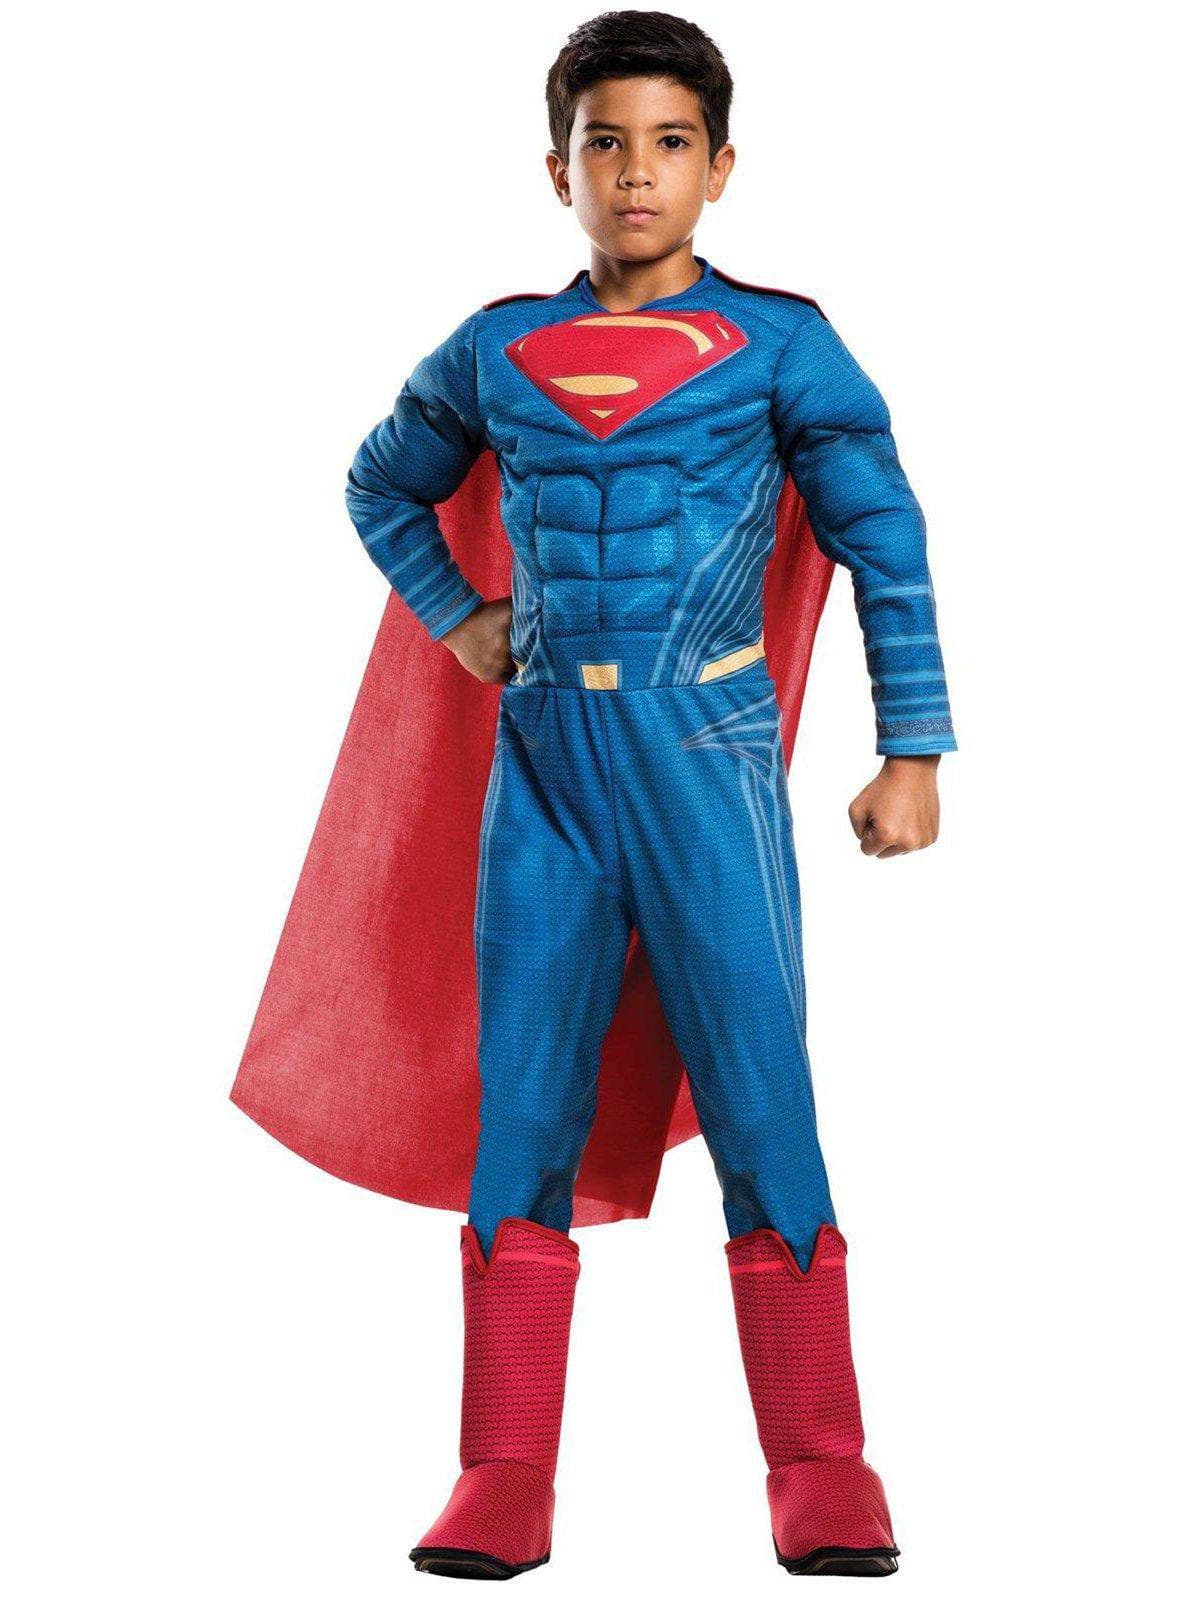 Kids Justice League Superman Deluxe Costume - costumes.com